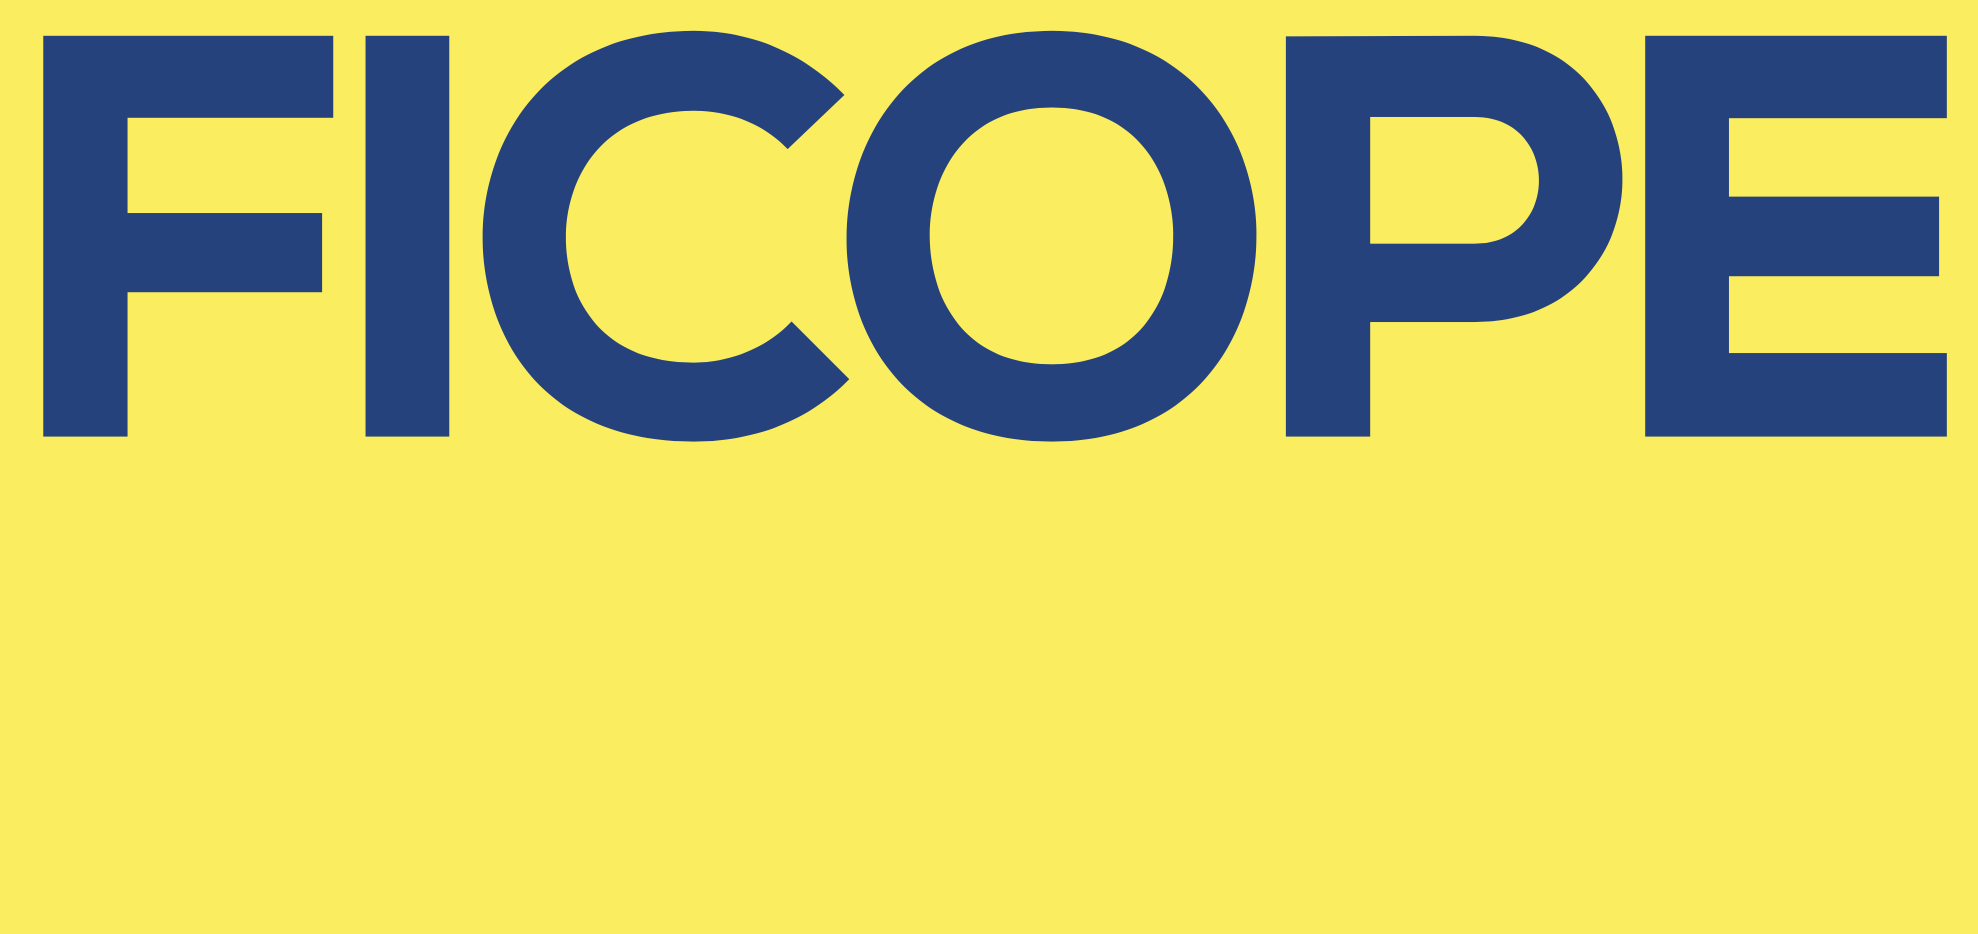 FICOPE logo